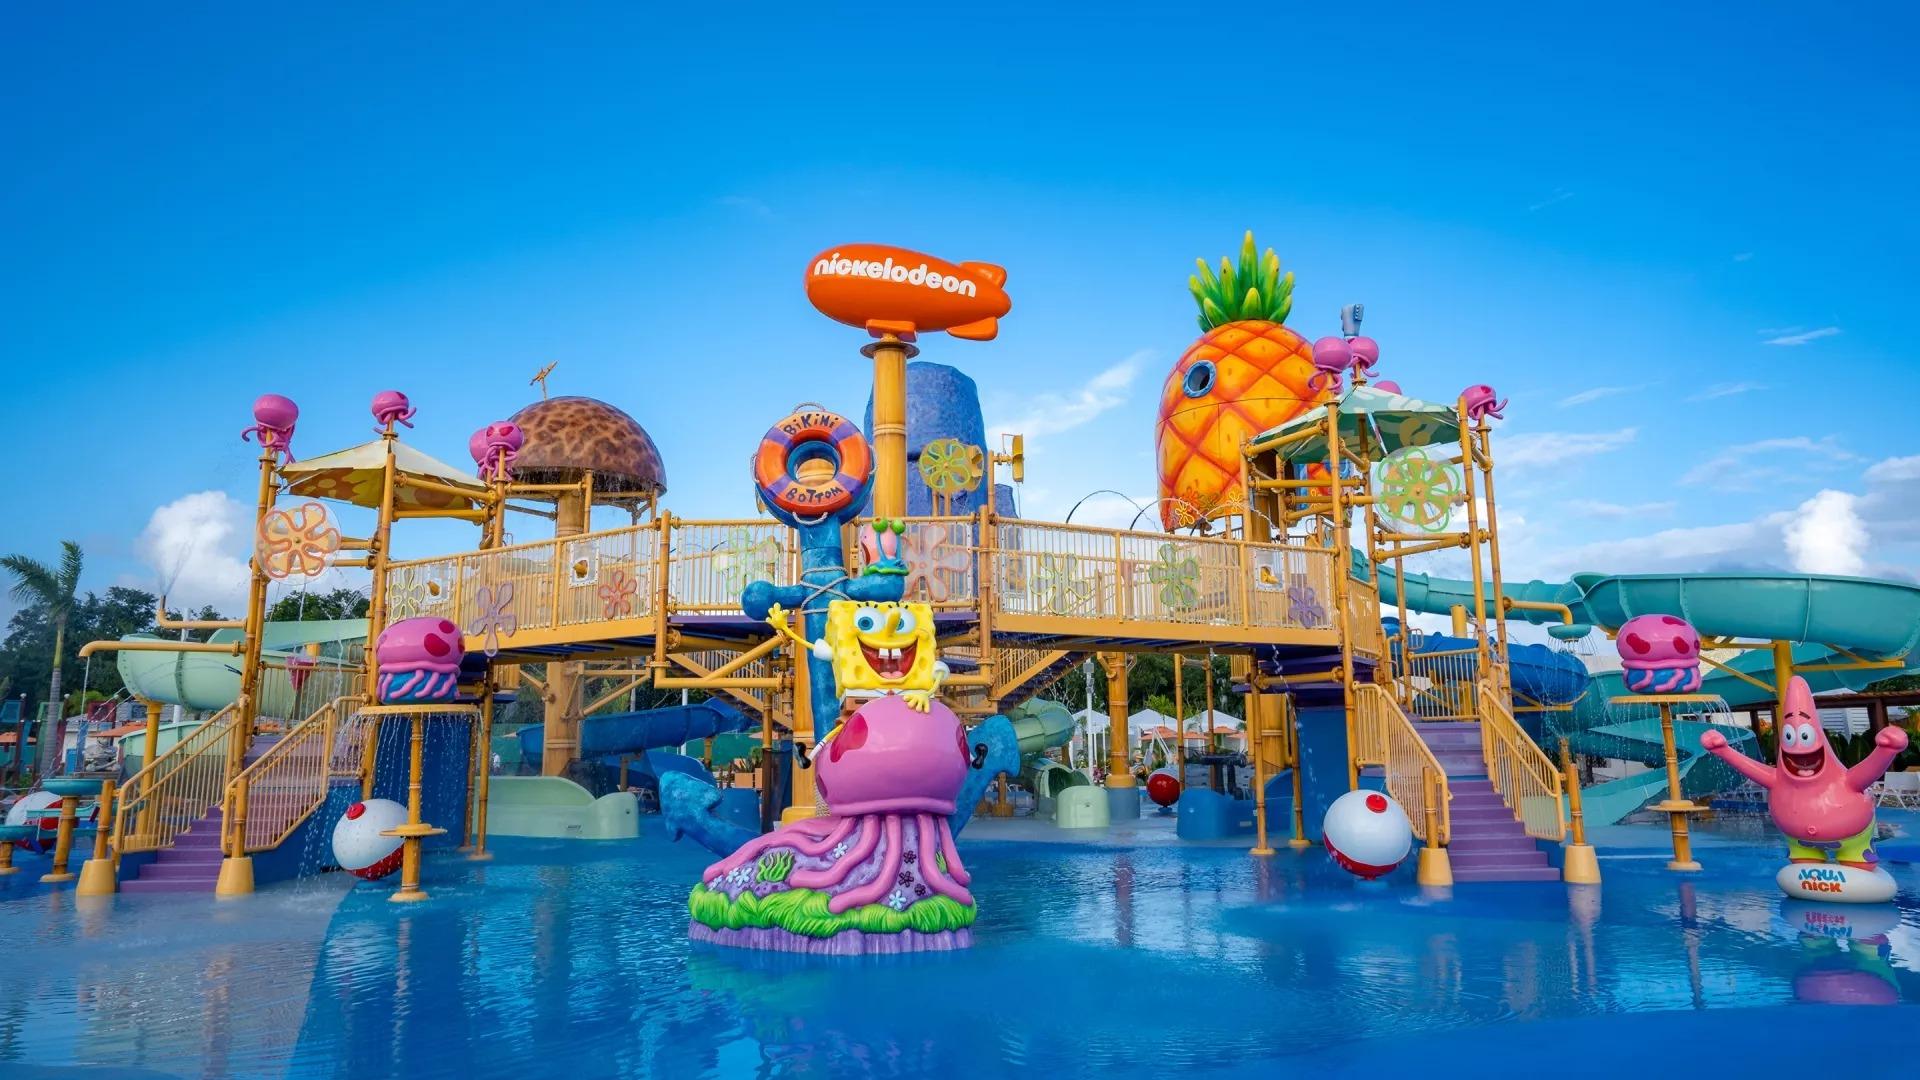 Wideshot of Nickelodeon water park with Spongebob characters